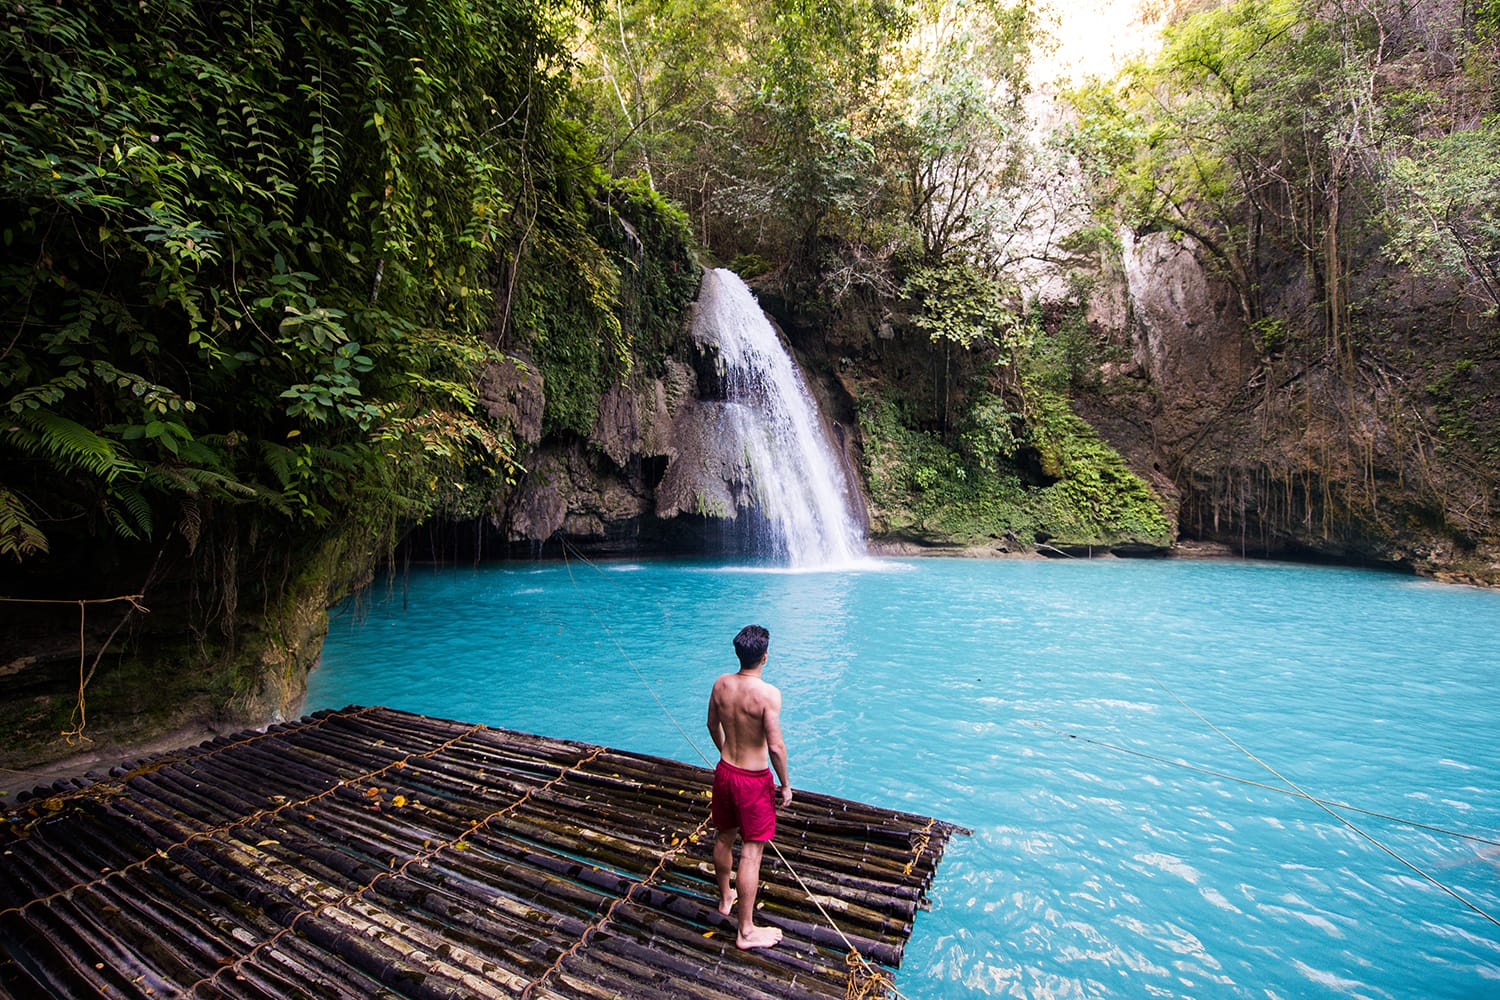 Kawasan waterfalls located on Cebu Island, Philippines